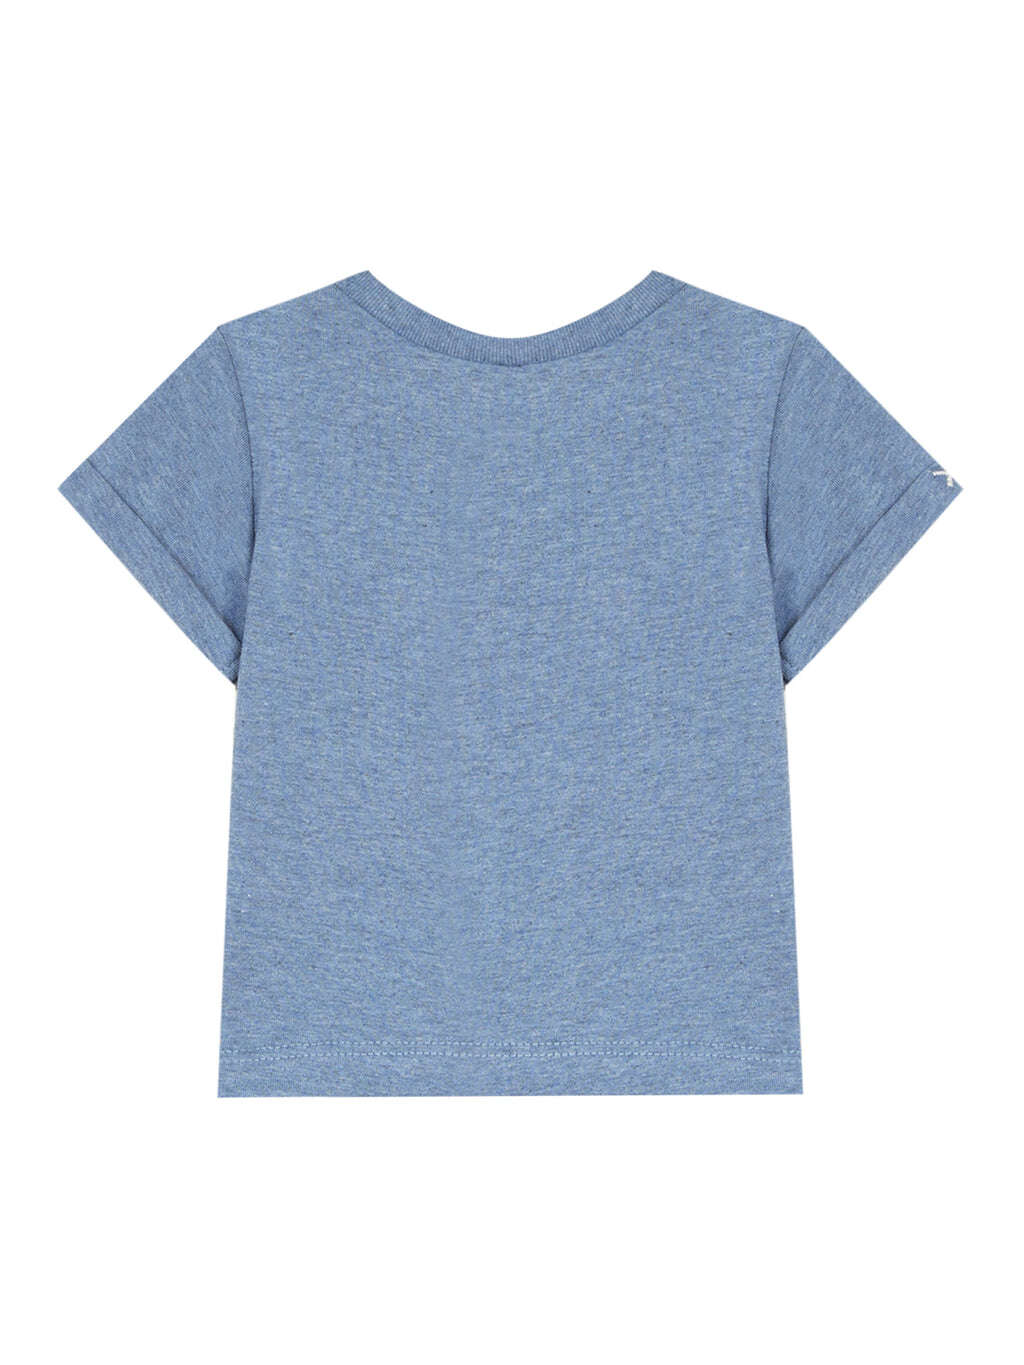 Tee-shirt - Jersey bleu illustration océan